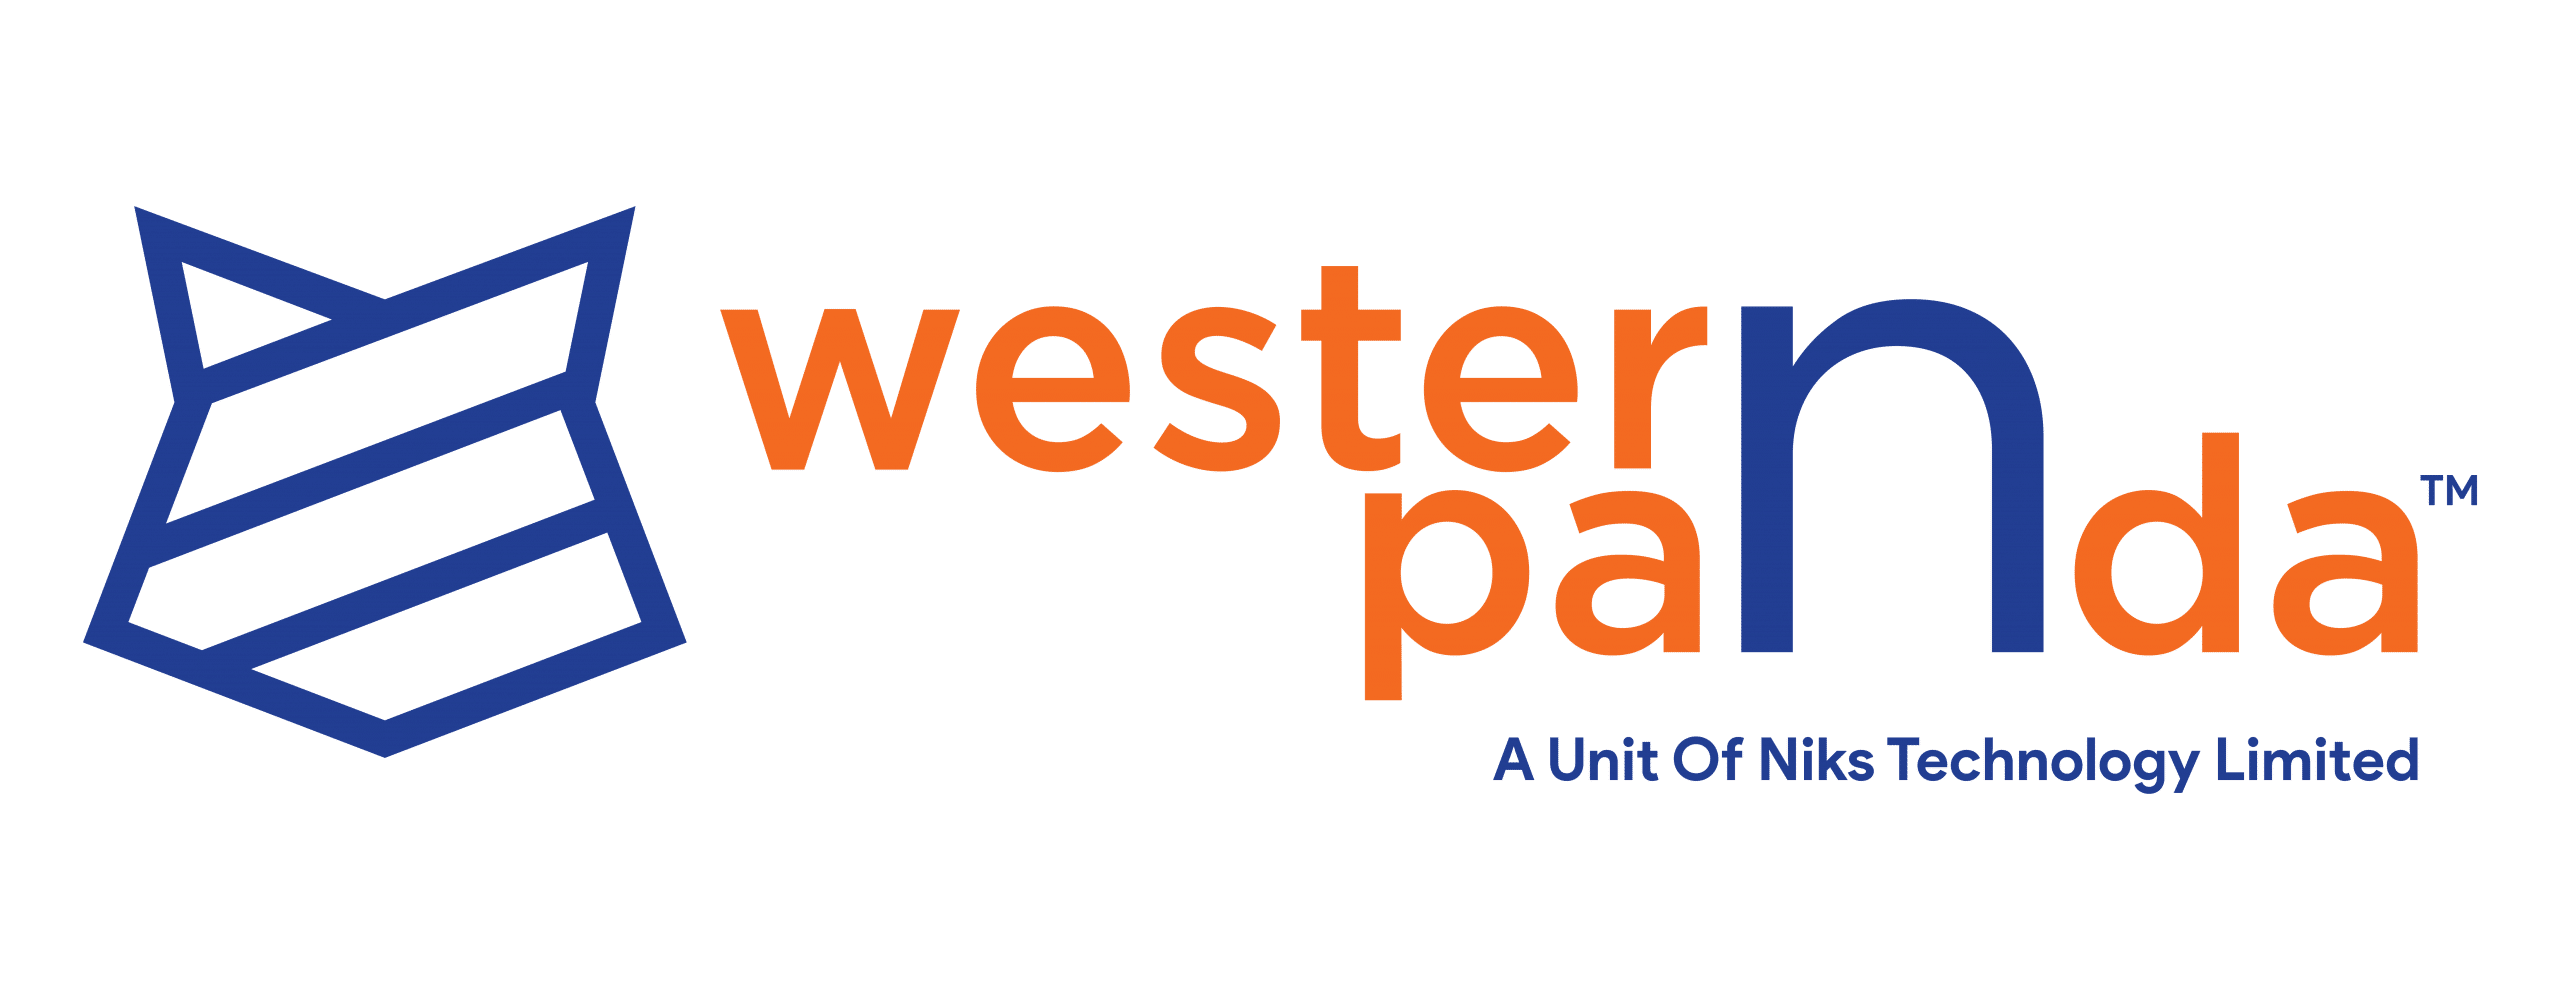 Western Panda Logo